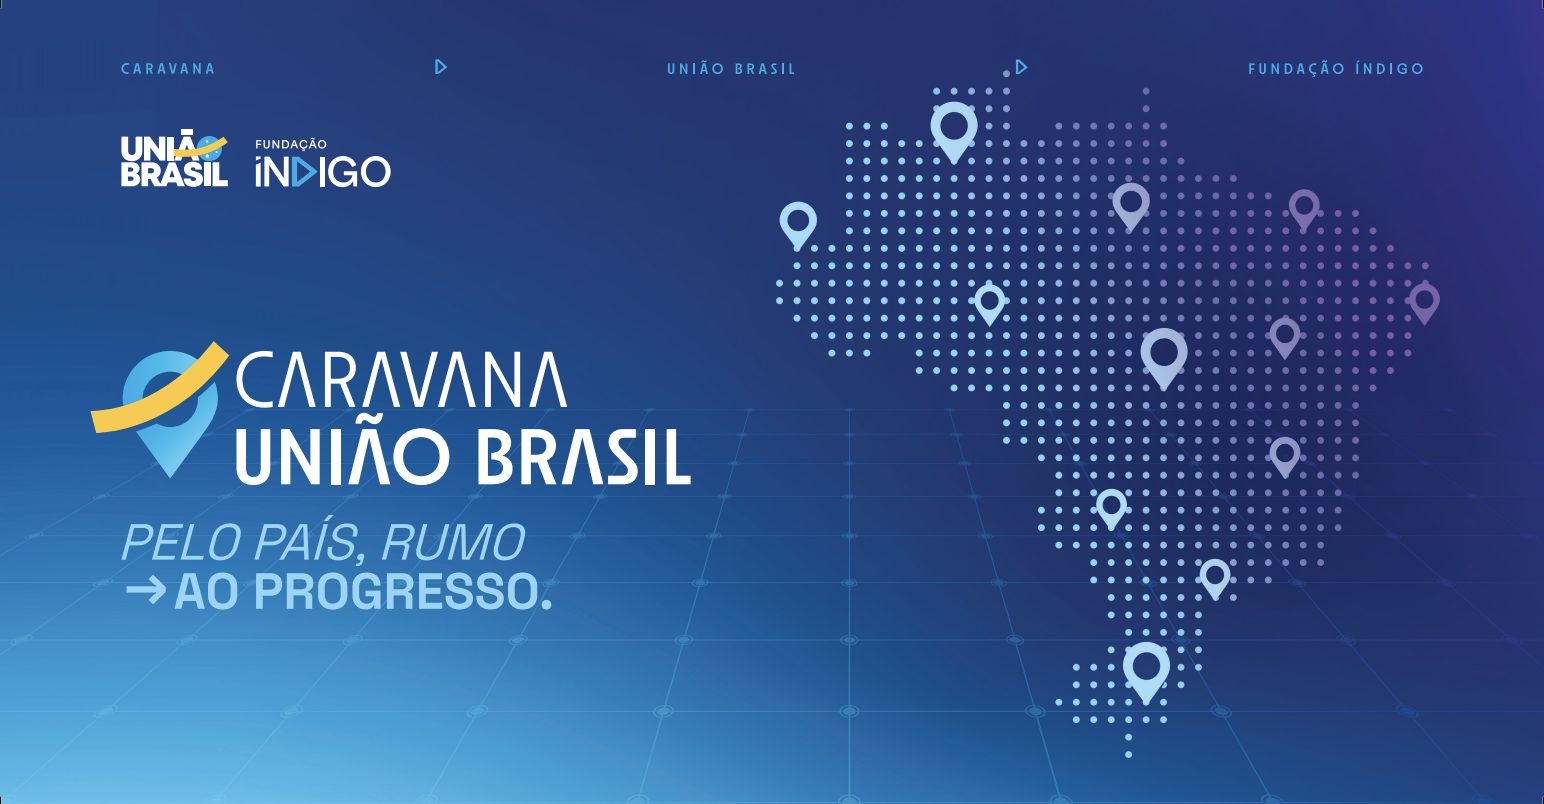 CARAVANA UNIÃO BRASIL - FUNDAÇÃO ÍNDIGO